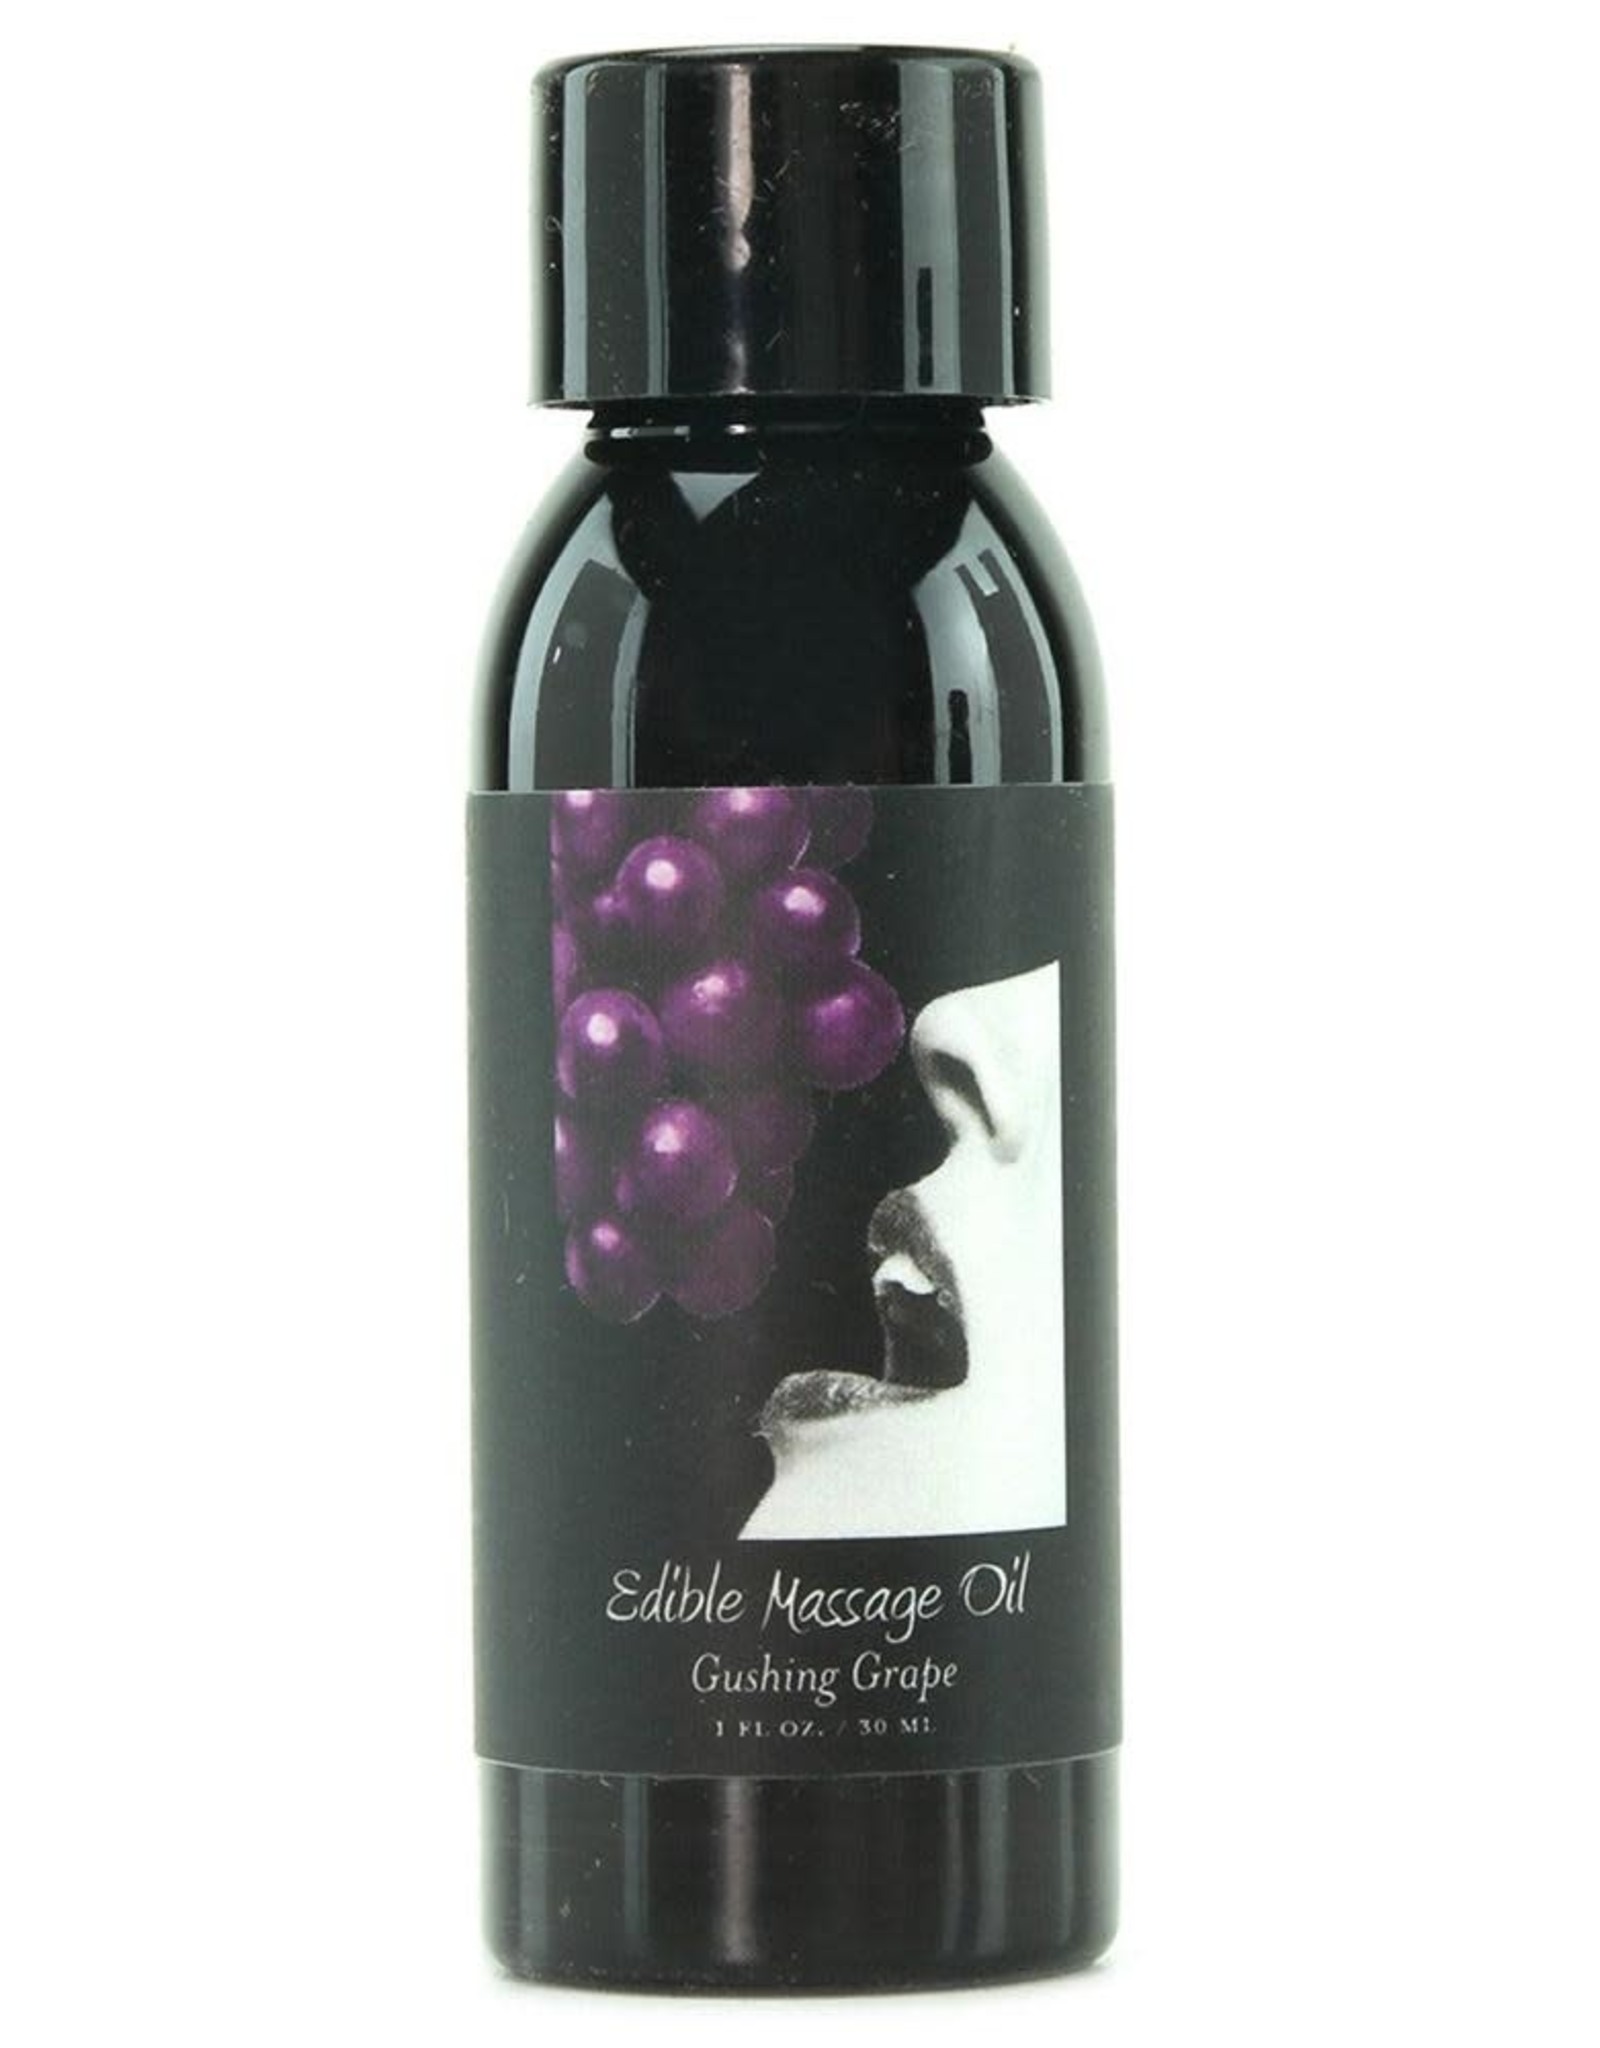 Earthly Body Earthly Body - Edible Massage Oil - Gushing Grape - 2oz